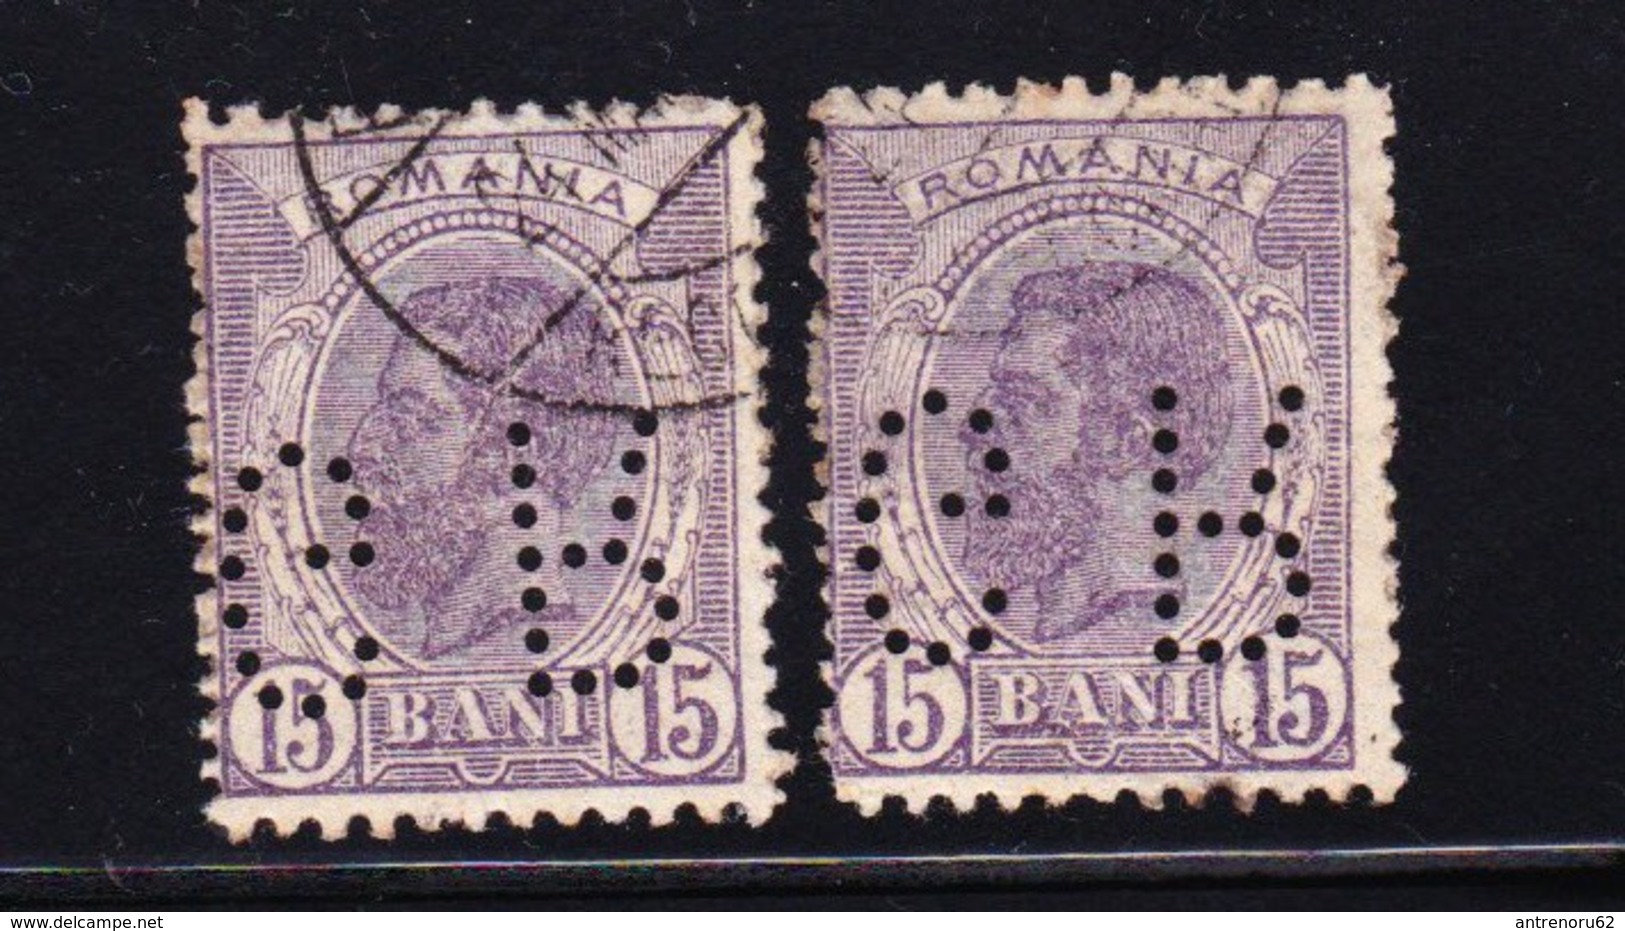 STAMPS-ROMANIA-PERFINS-USED-SEE-SCAN - 1858-1880 Moldavia & Principality